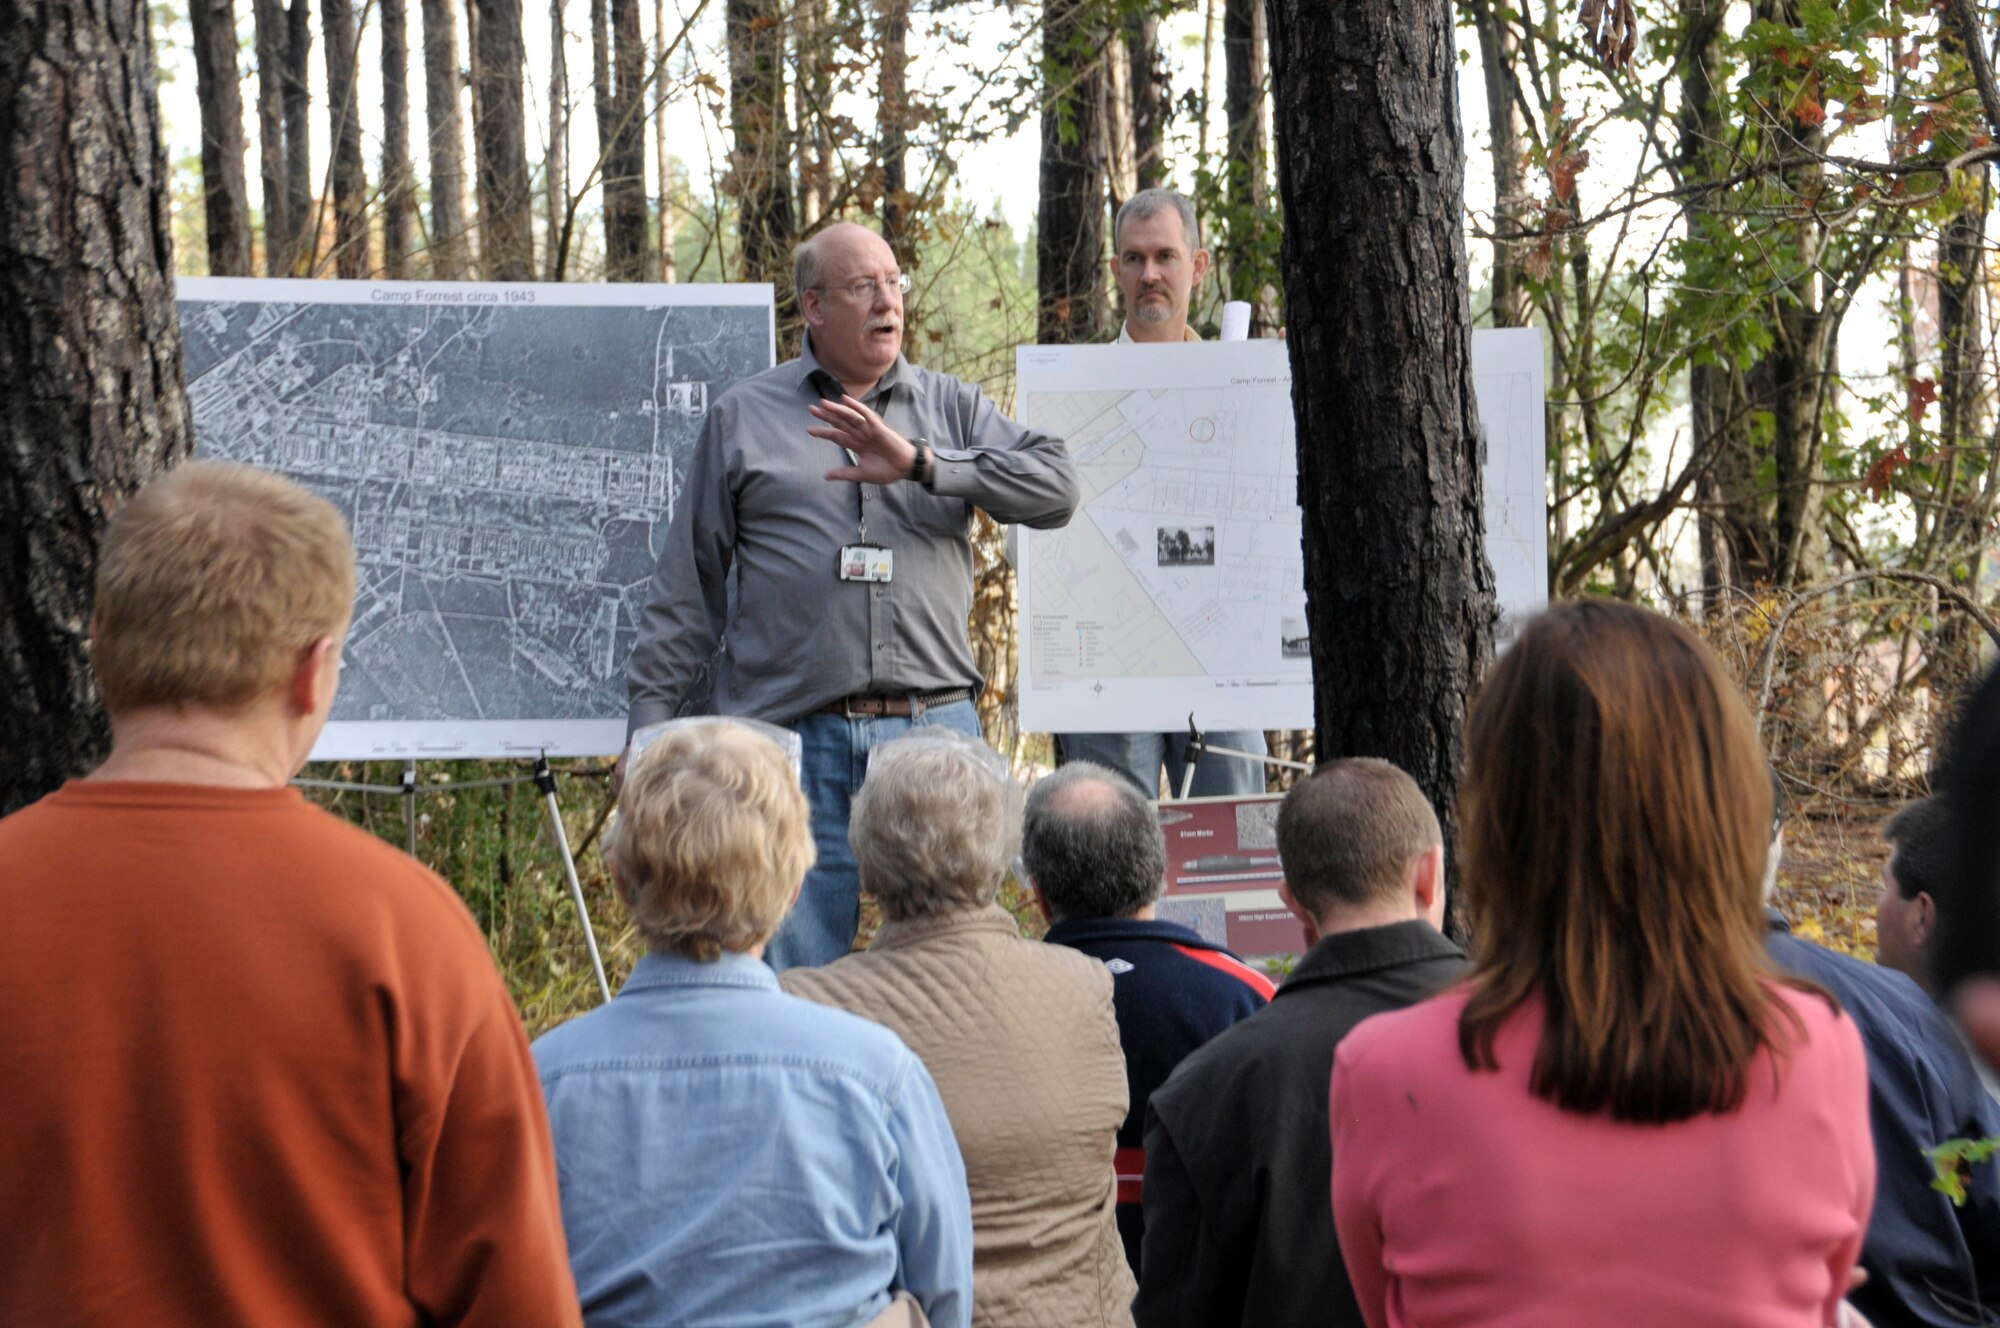 David Hiebert, base historian, presents an accountof Camp Forrest, teh World War II-era complex pre-dating Arnold. (Photo by Rick Goodfriend)